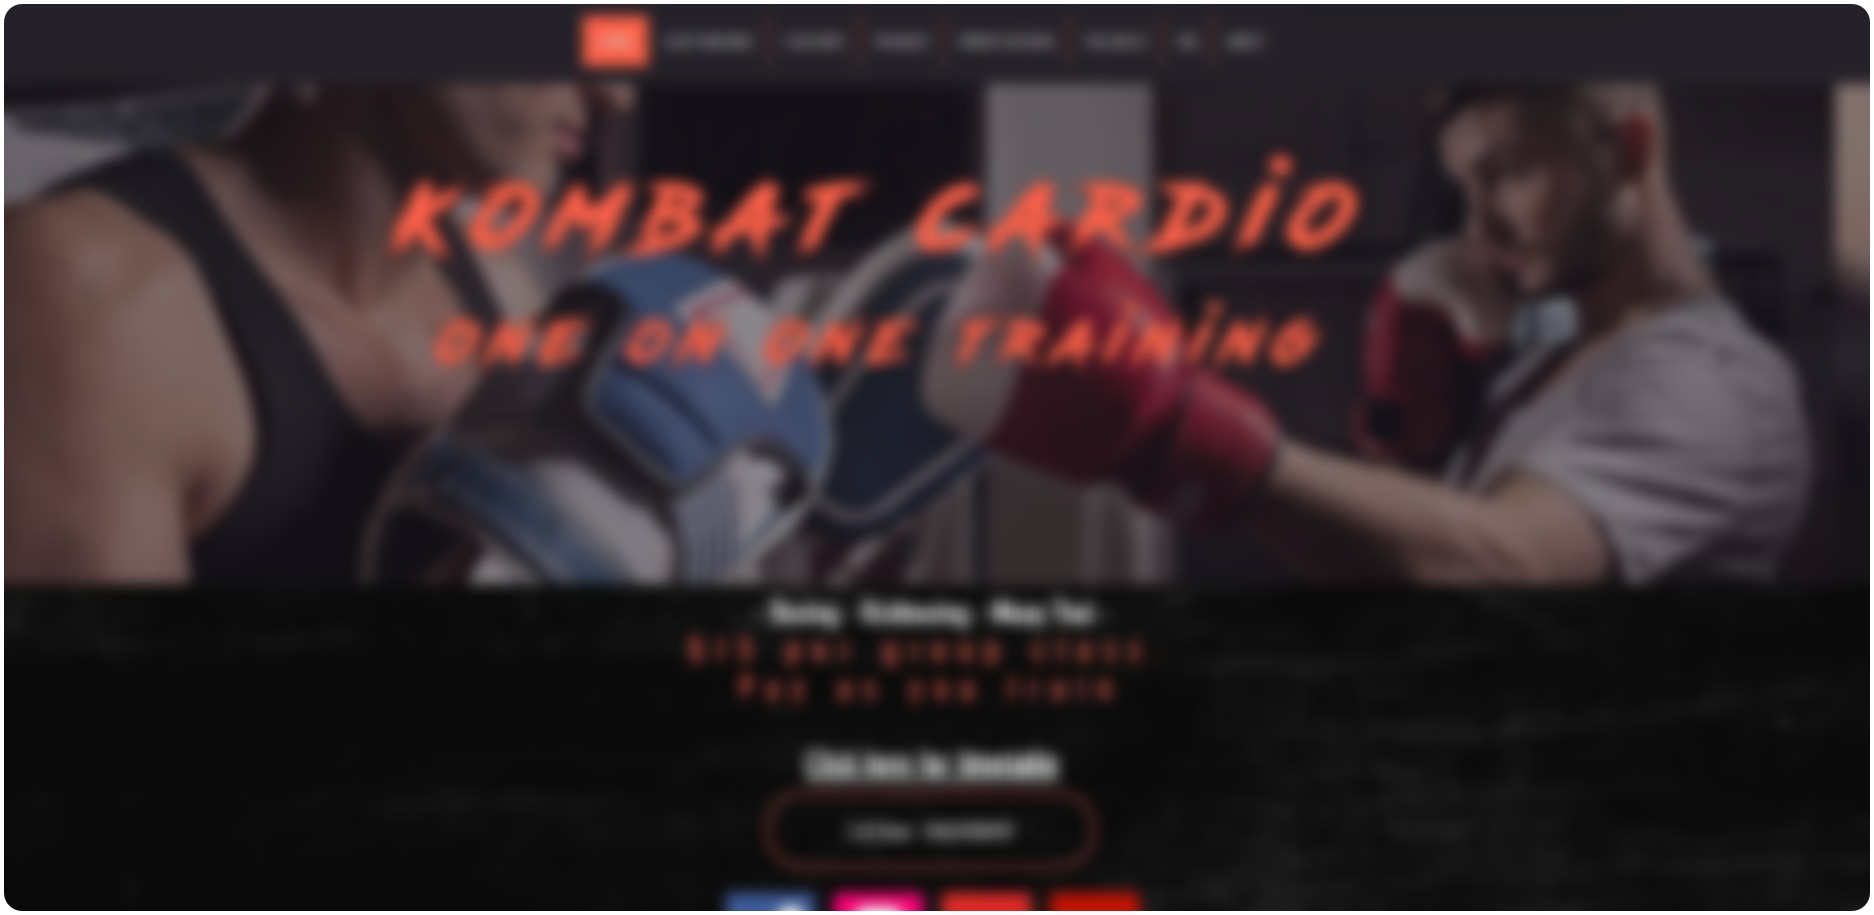 kombat cardio boxing